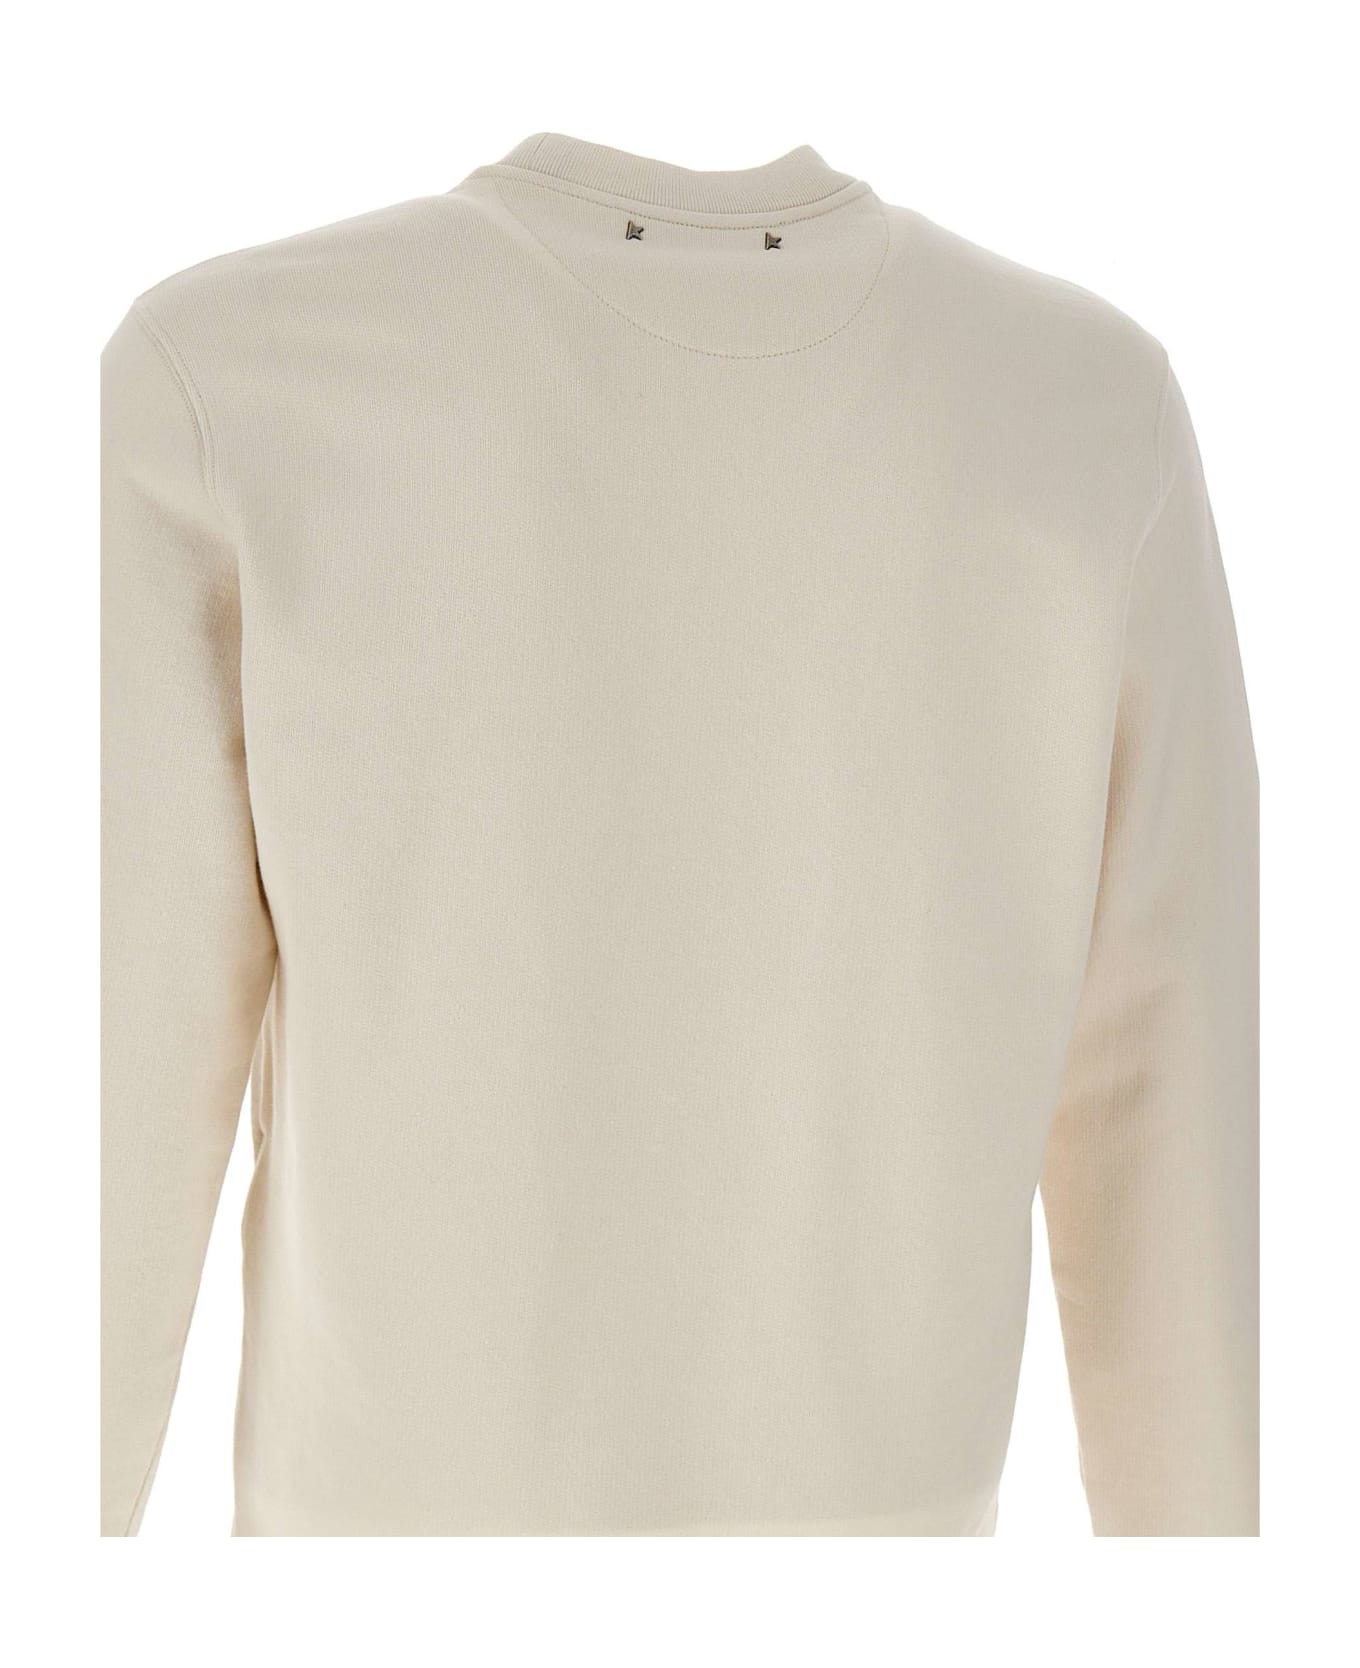 Golden Goose 'archibald' Cotton Sweatshirt - WHITE